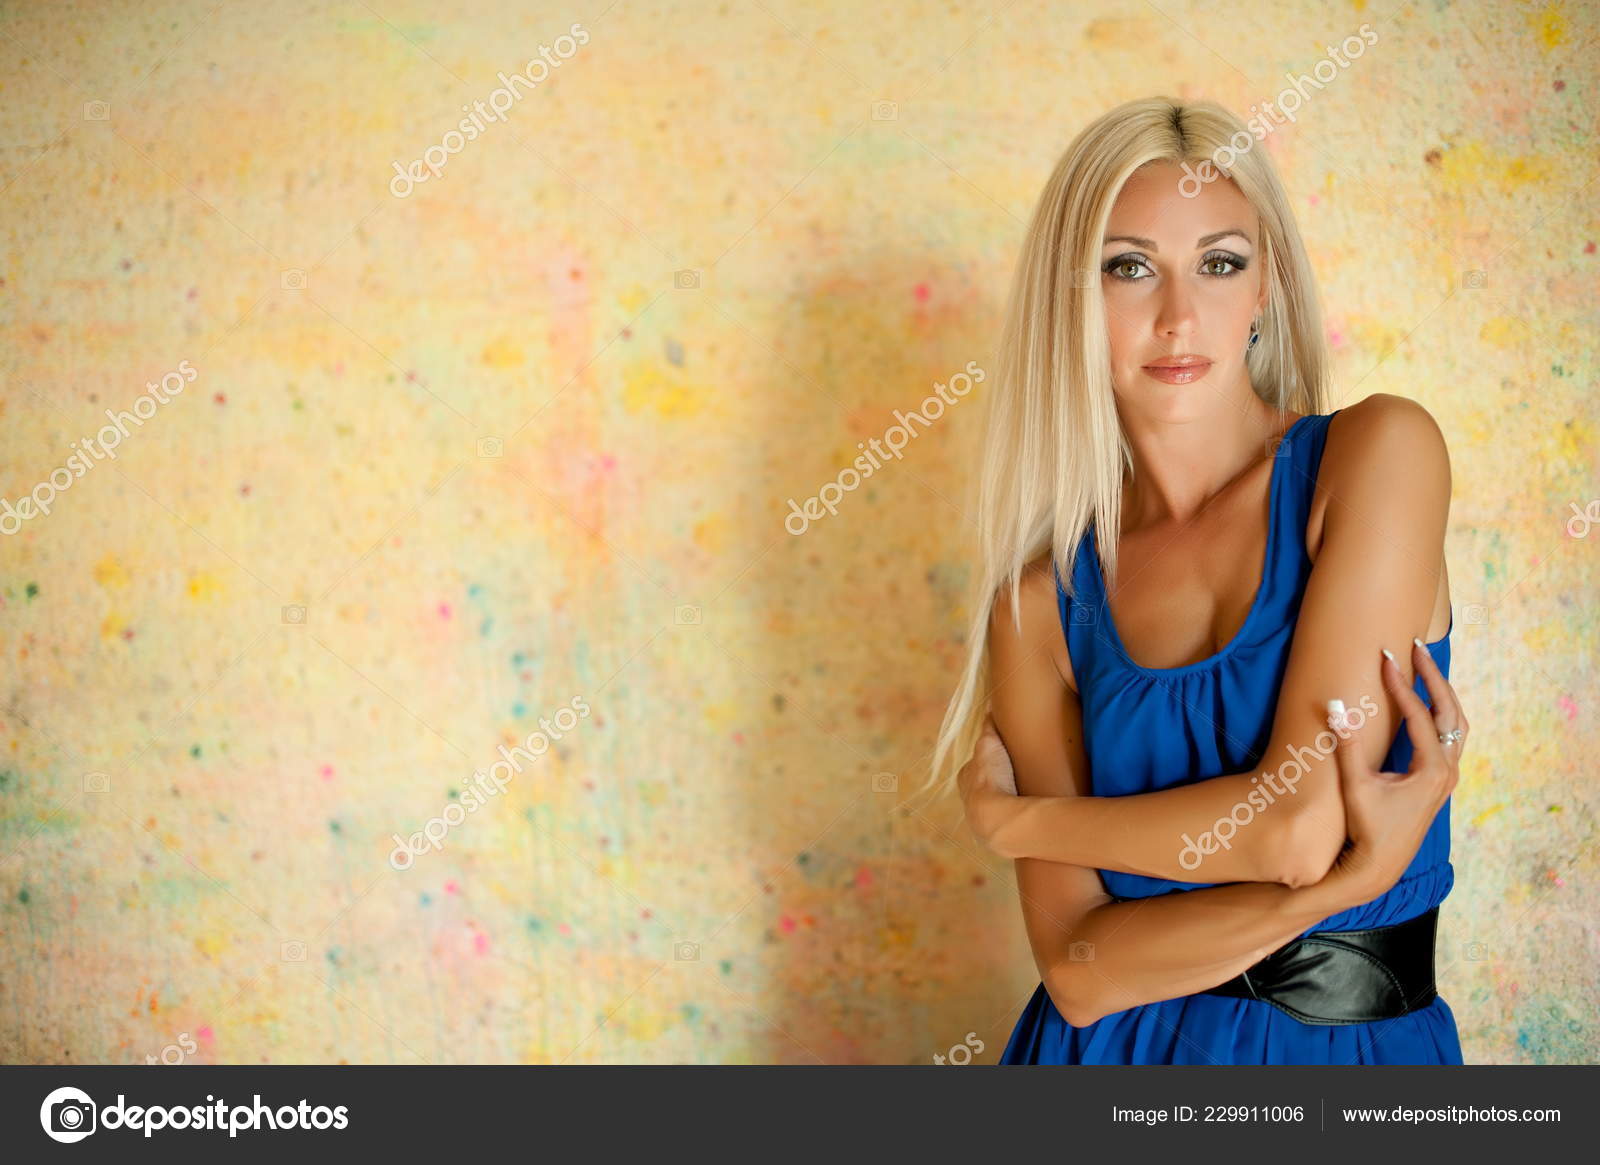 https://st4.depositphotos.com/1012146/22991/i/1600/depositphotos_229911[001-999]-stock-photo-beautiful-sexy-blonde-girl-posing.jpg